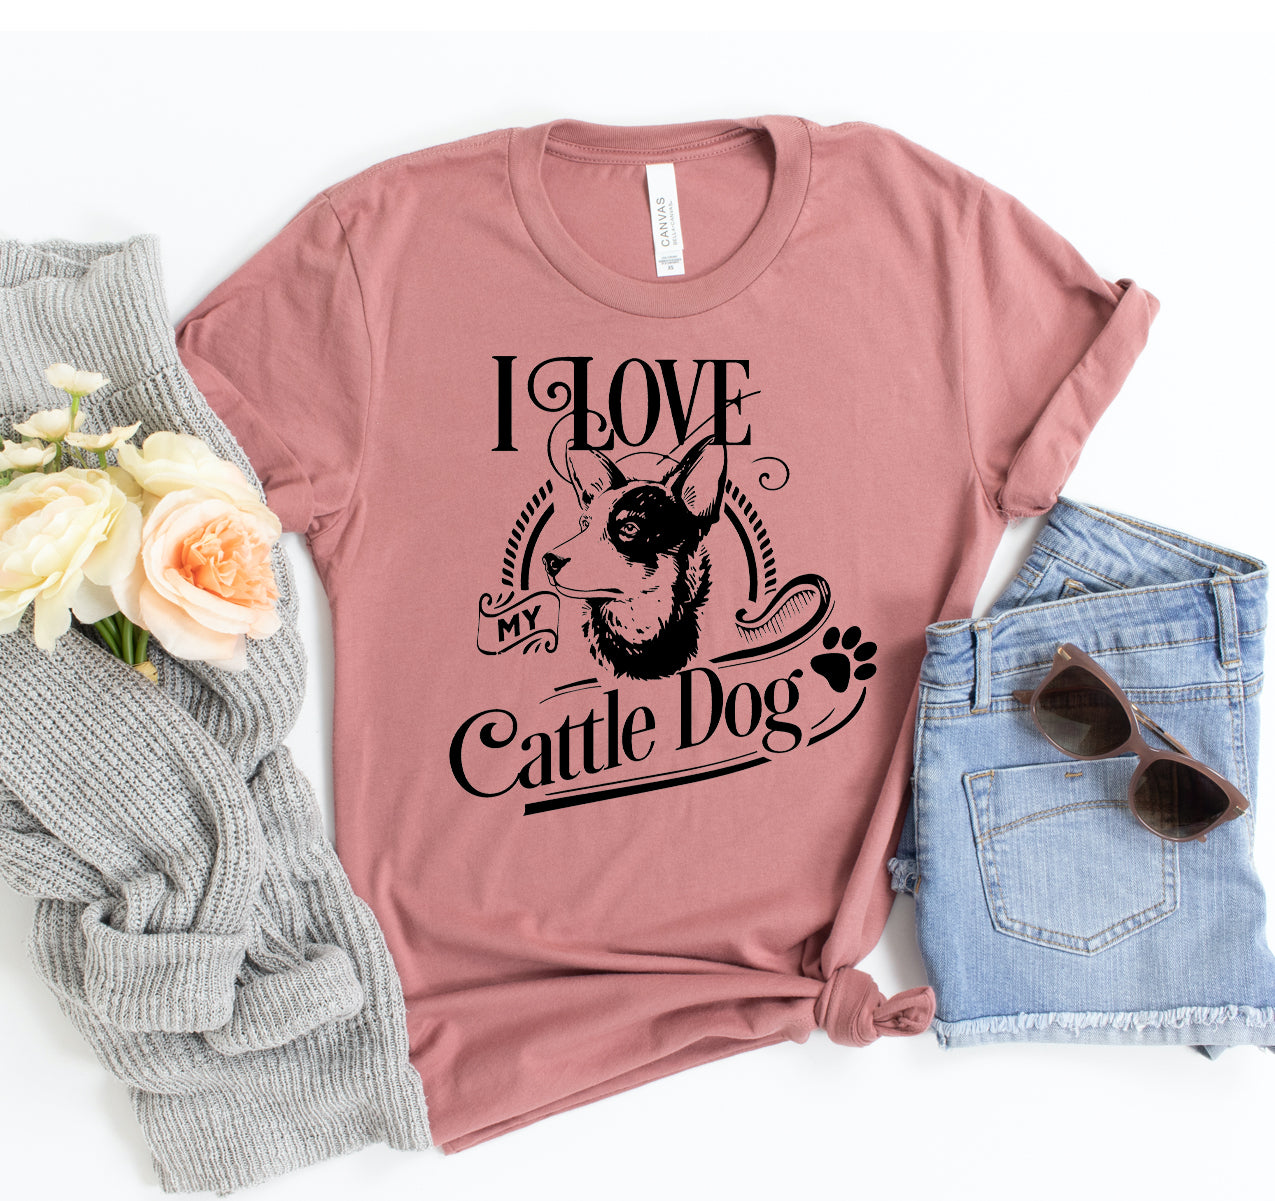 I Love My Cattle Dog T-shirt